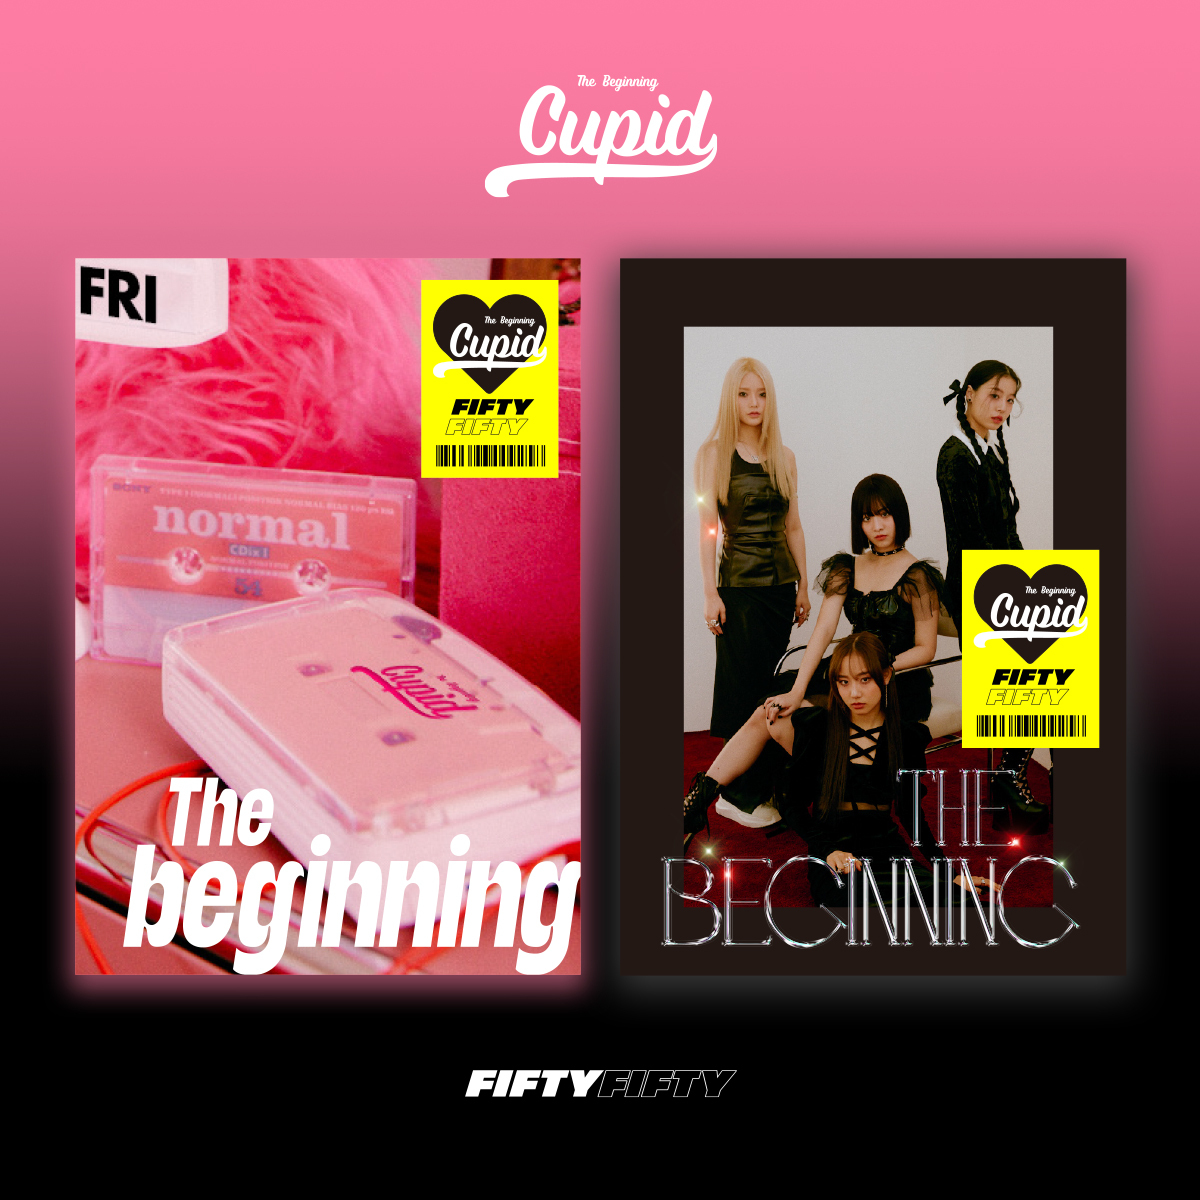 [全款 裸专] [视频签售活动] [2CD 套装] FIFTY FIFTY - 单曲1辑 [The Beginning: Cupid] (NERD Ver. + BLACK Ver.)_SAENA _wonderland